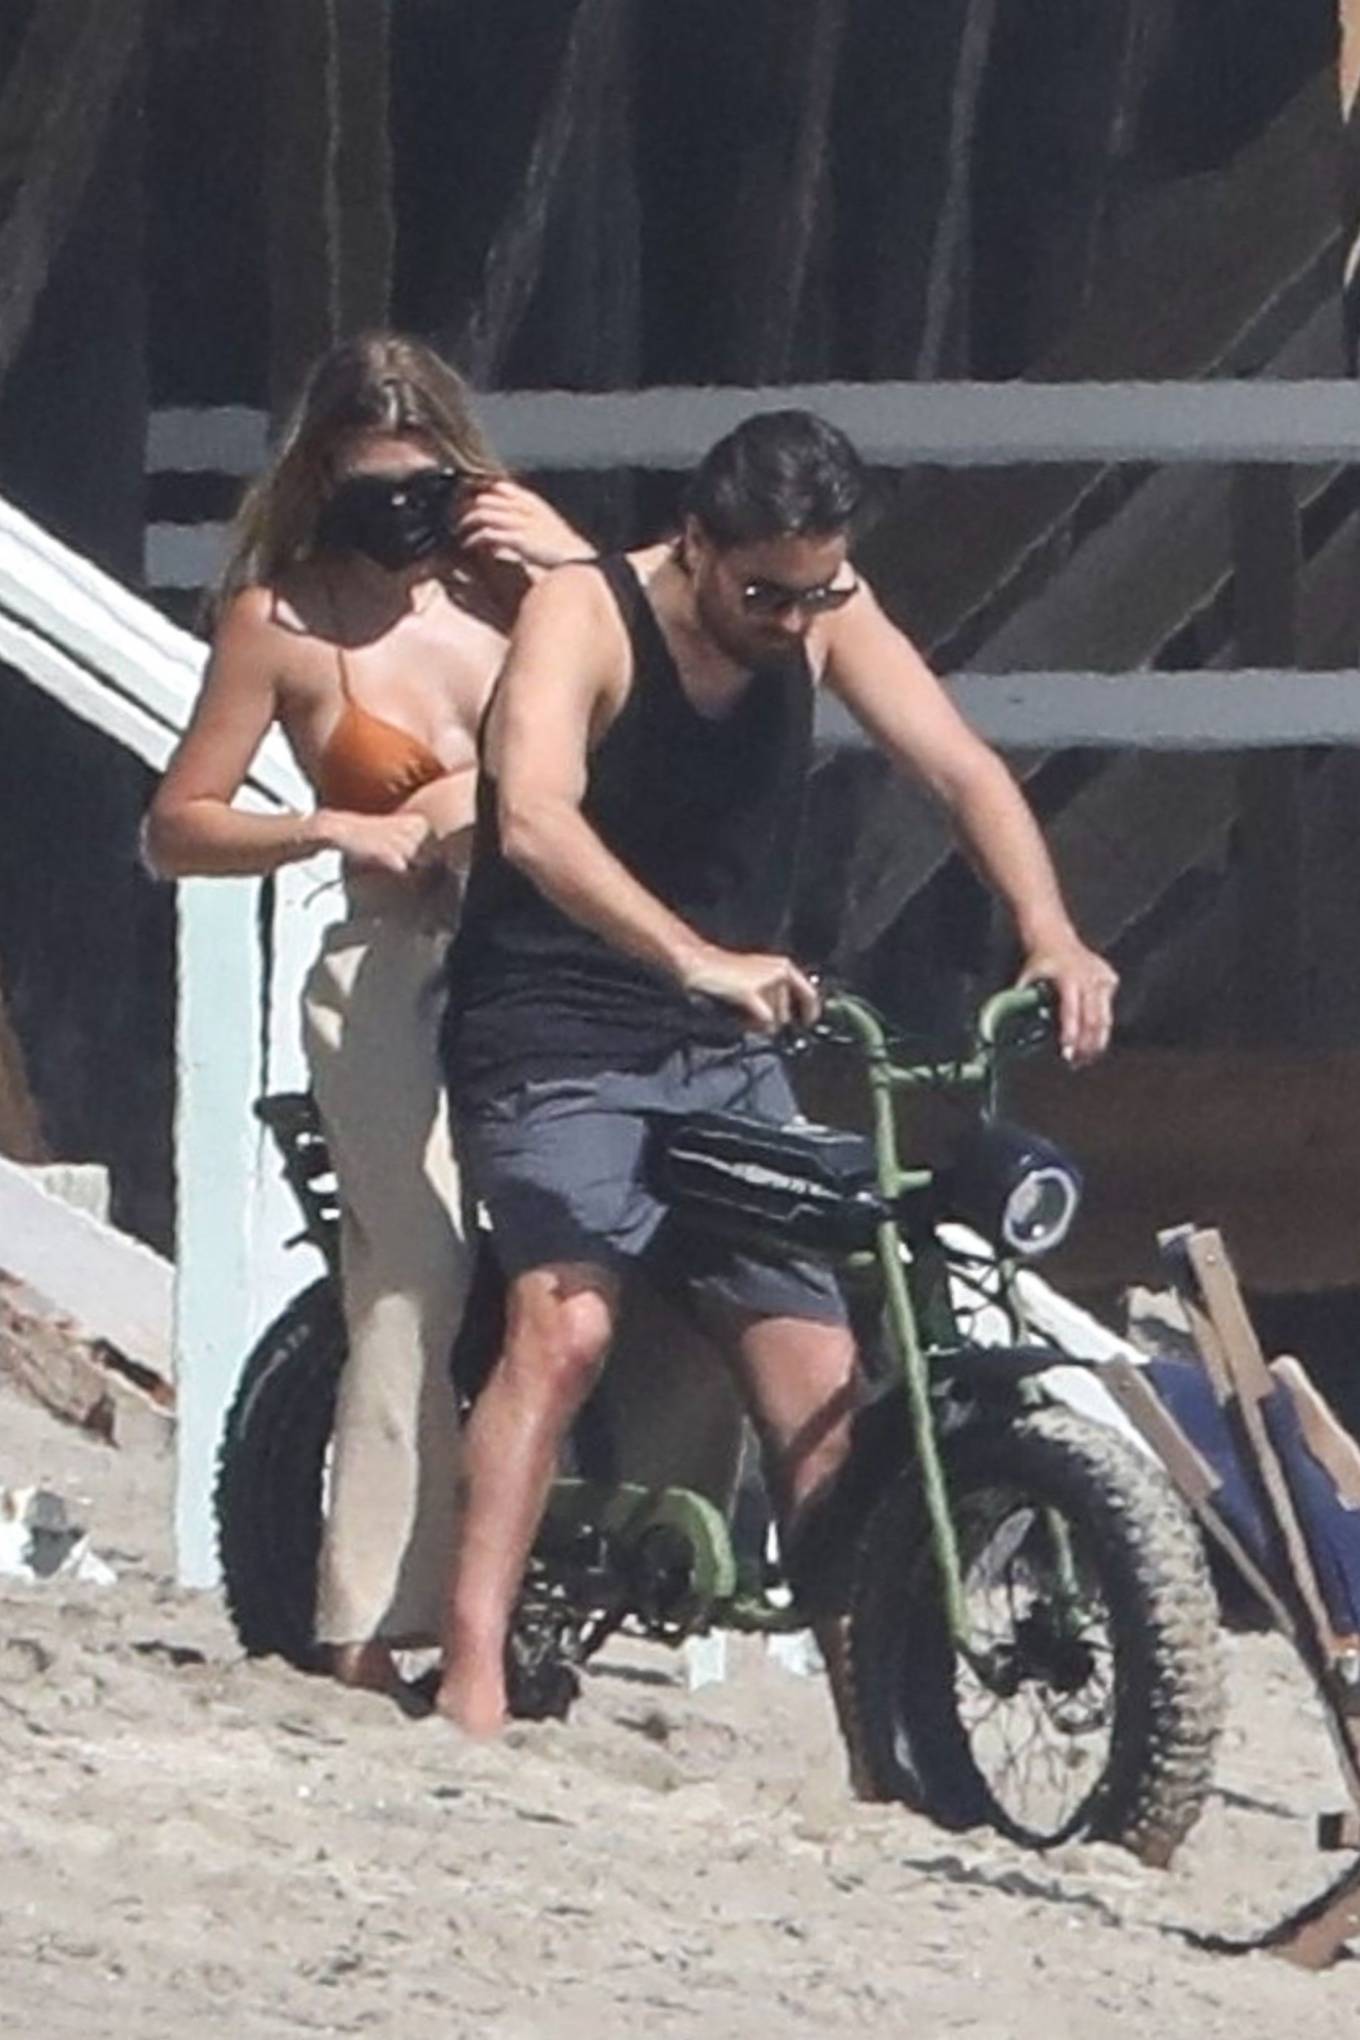 Sofia Richie and Scott Disick have some fun riding a motorbike in Malibu